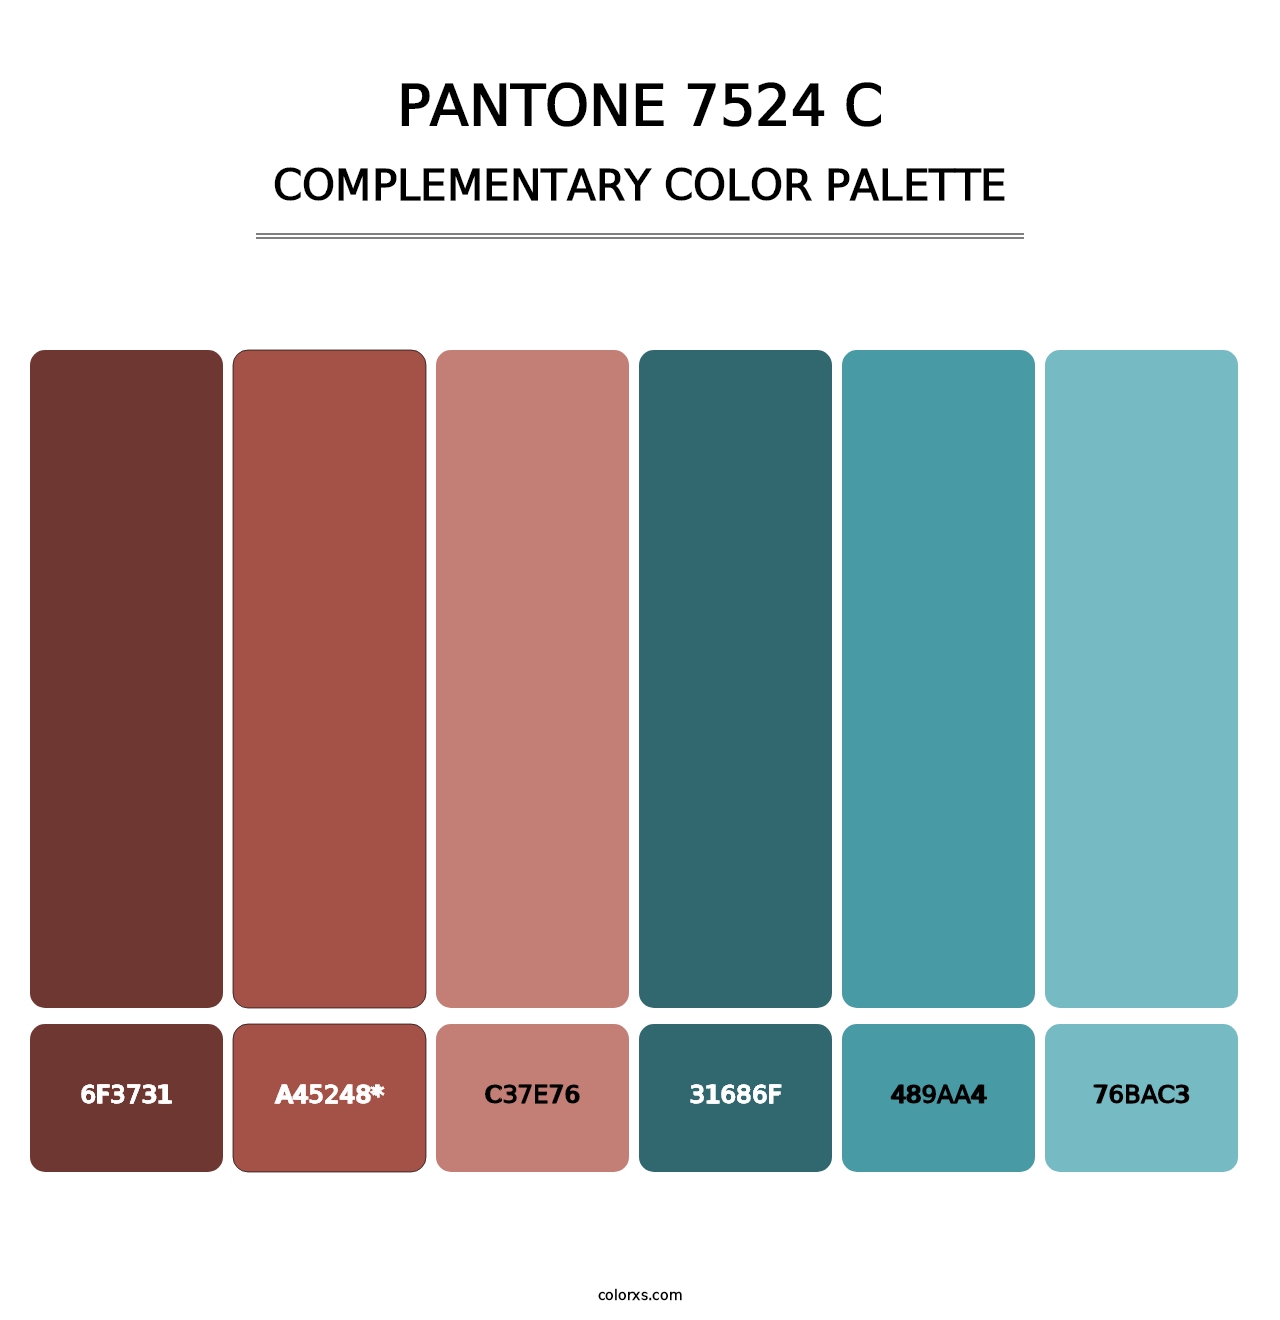 PANTONE 7524 C - Complementary Color Palette